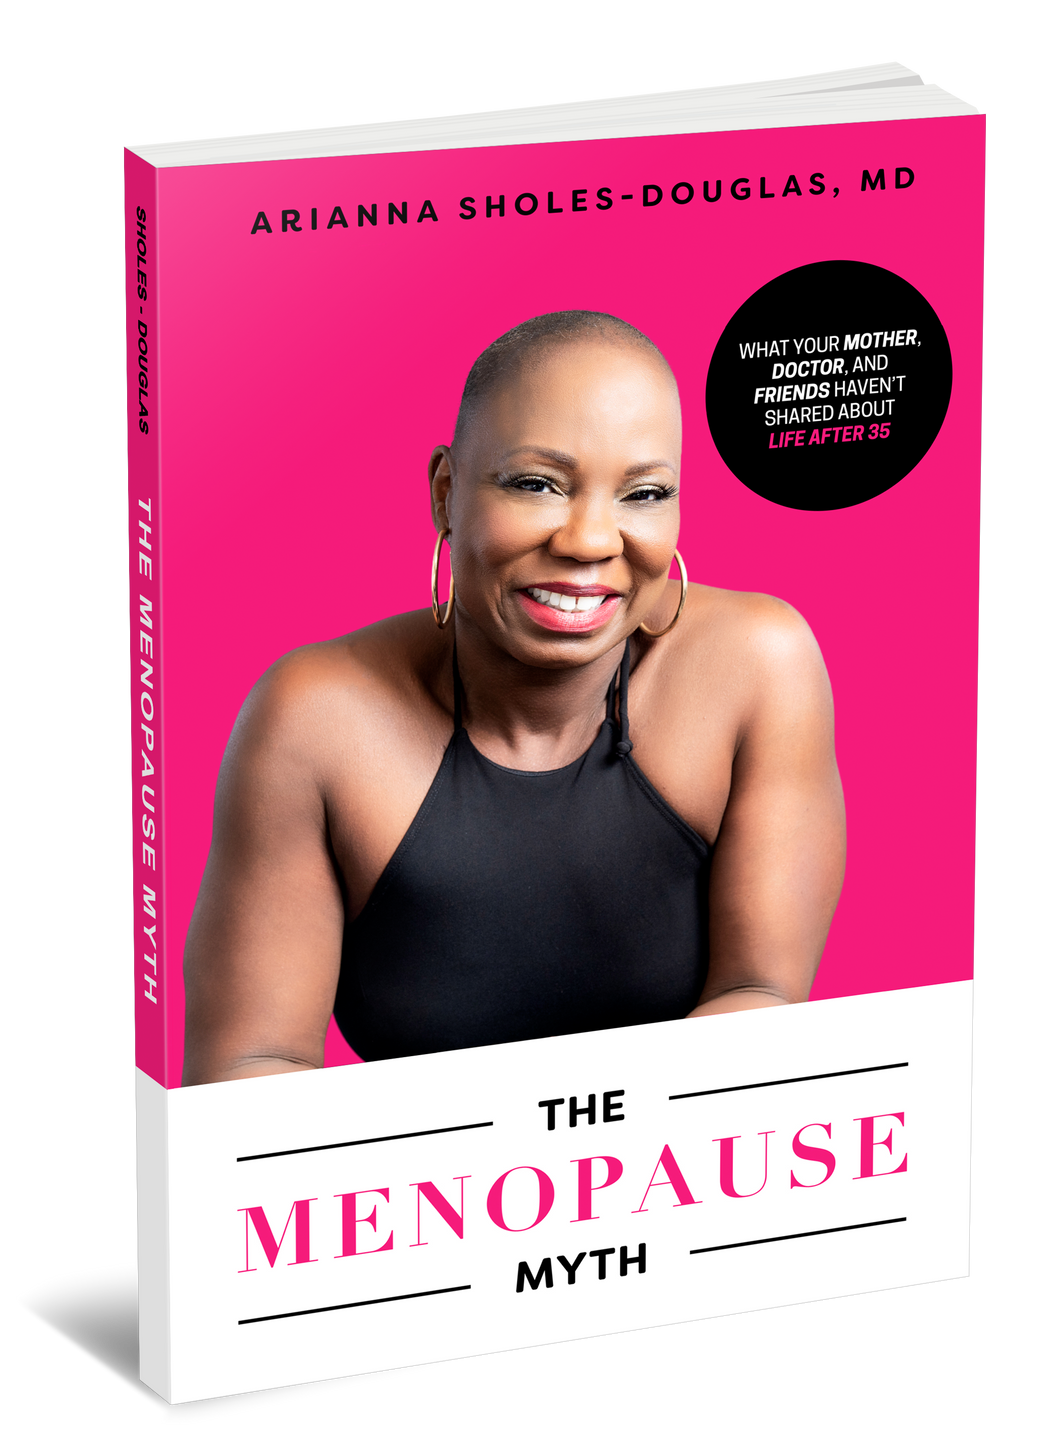 The Menopause Myth by Dr. Arianna Sholes-Douglas